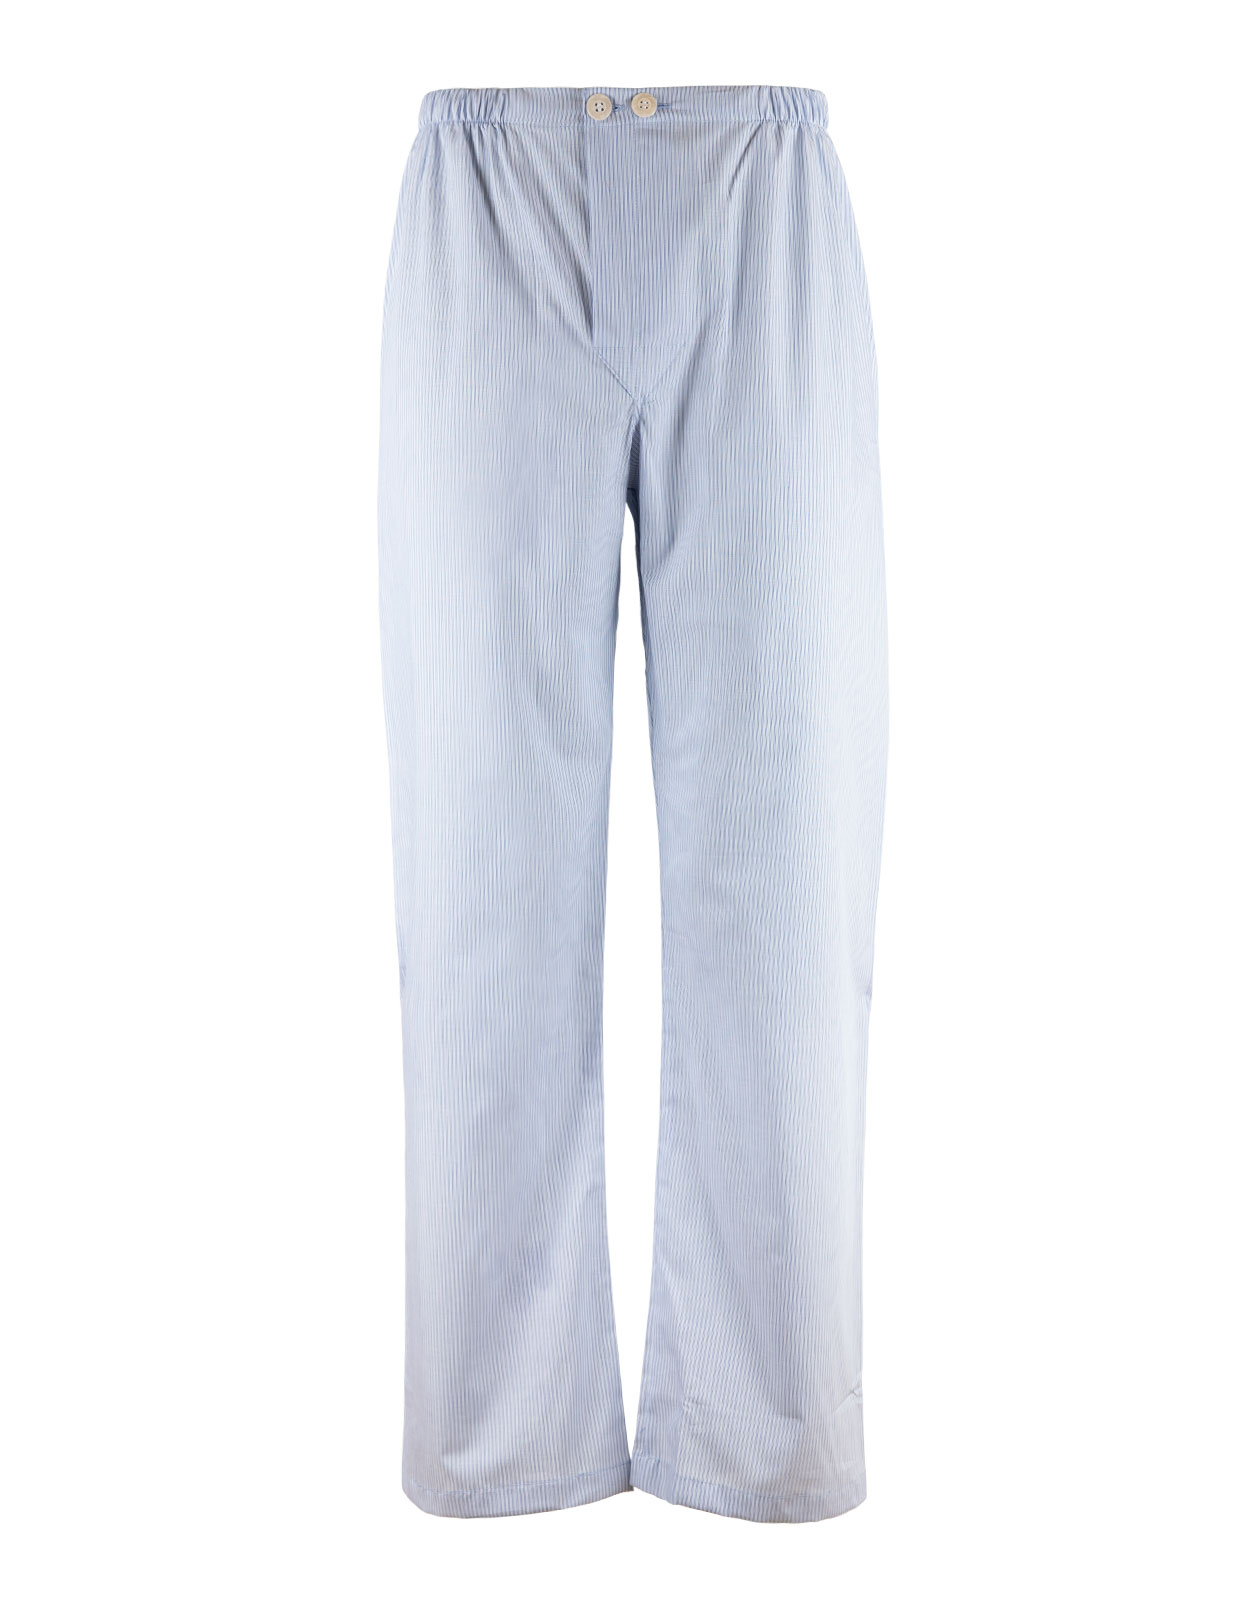 Saville Pyjamas Blå